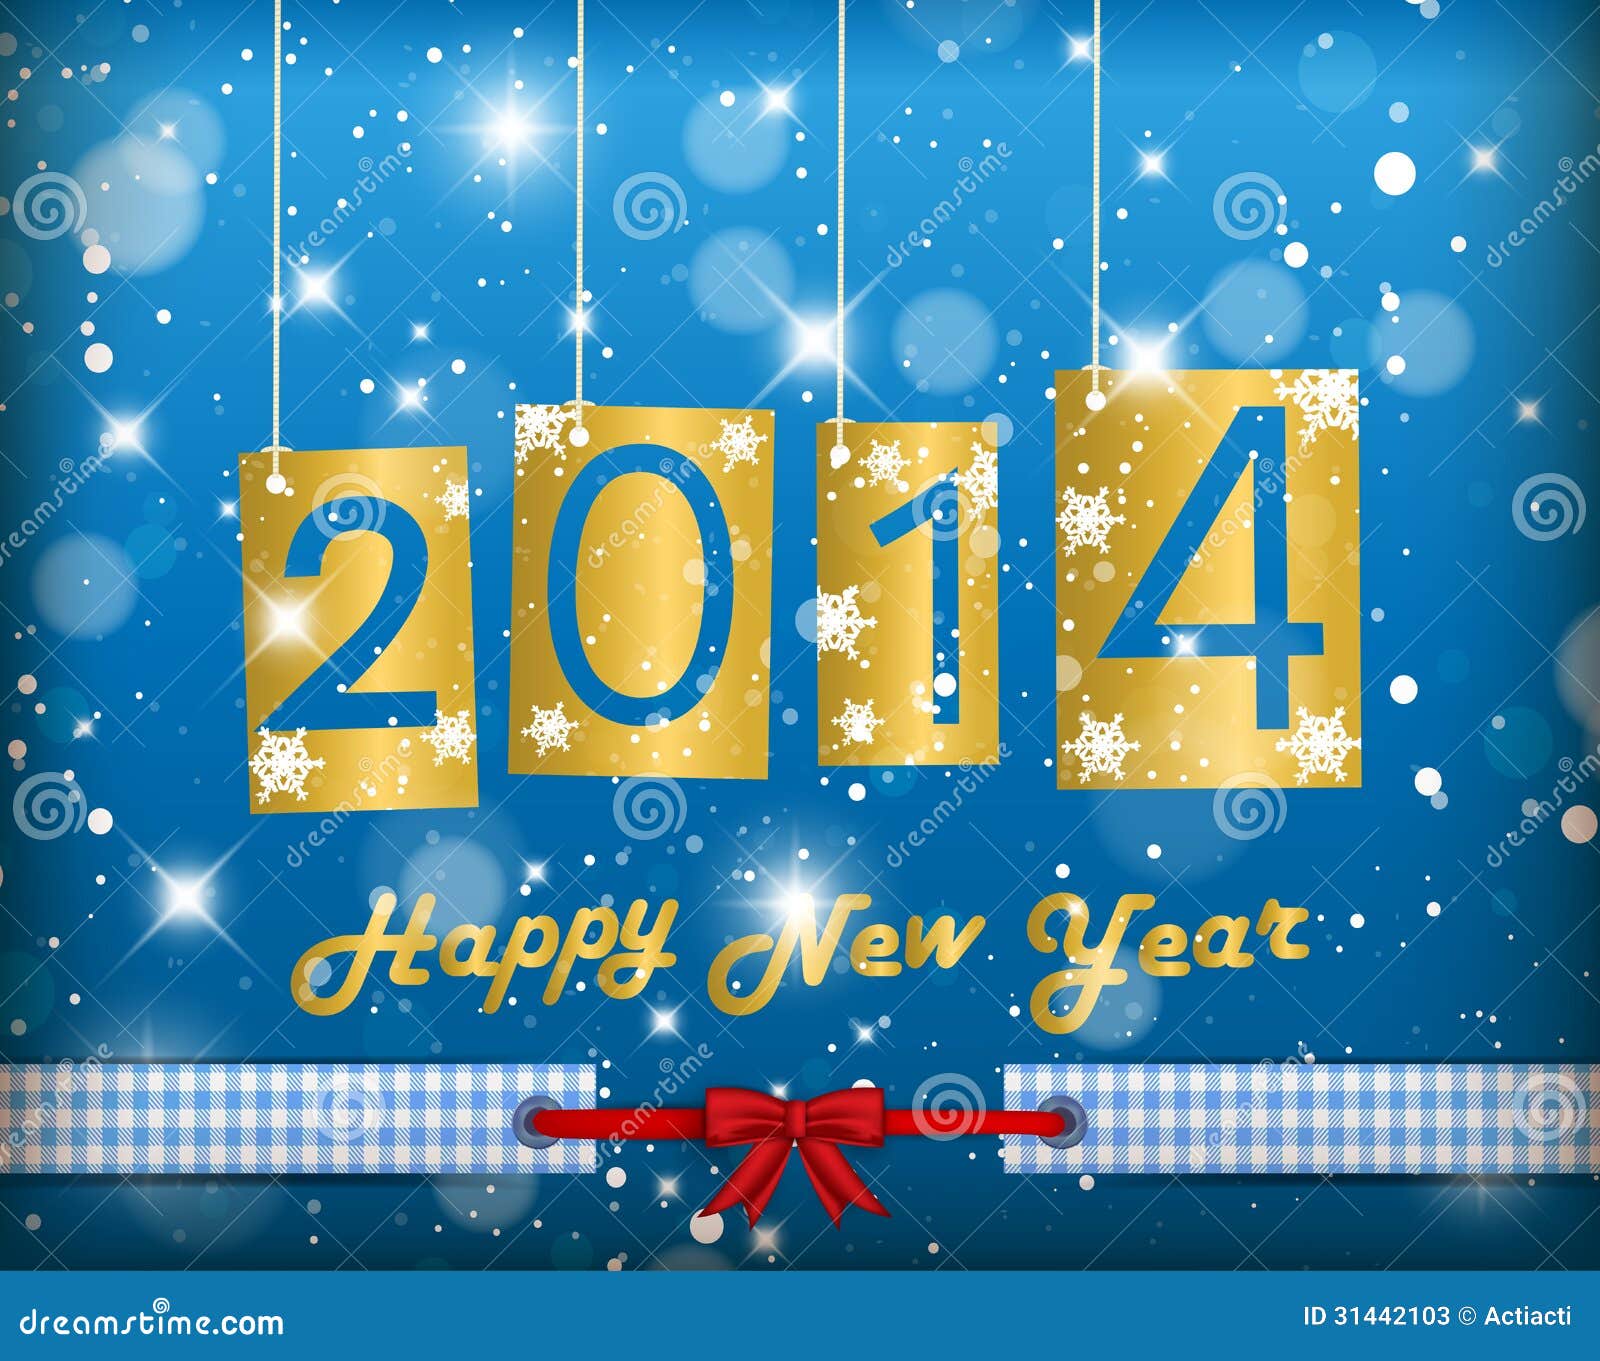 animated clipart happy new year 2014 - photo #44